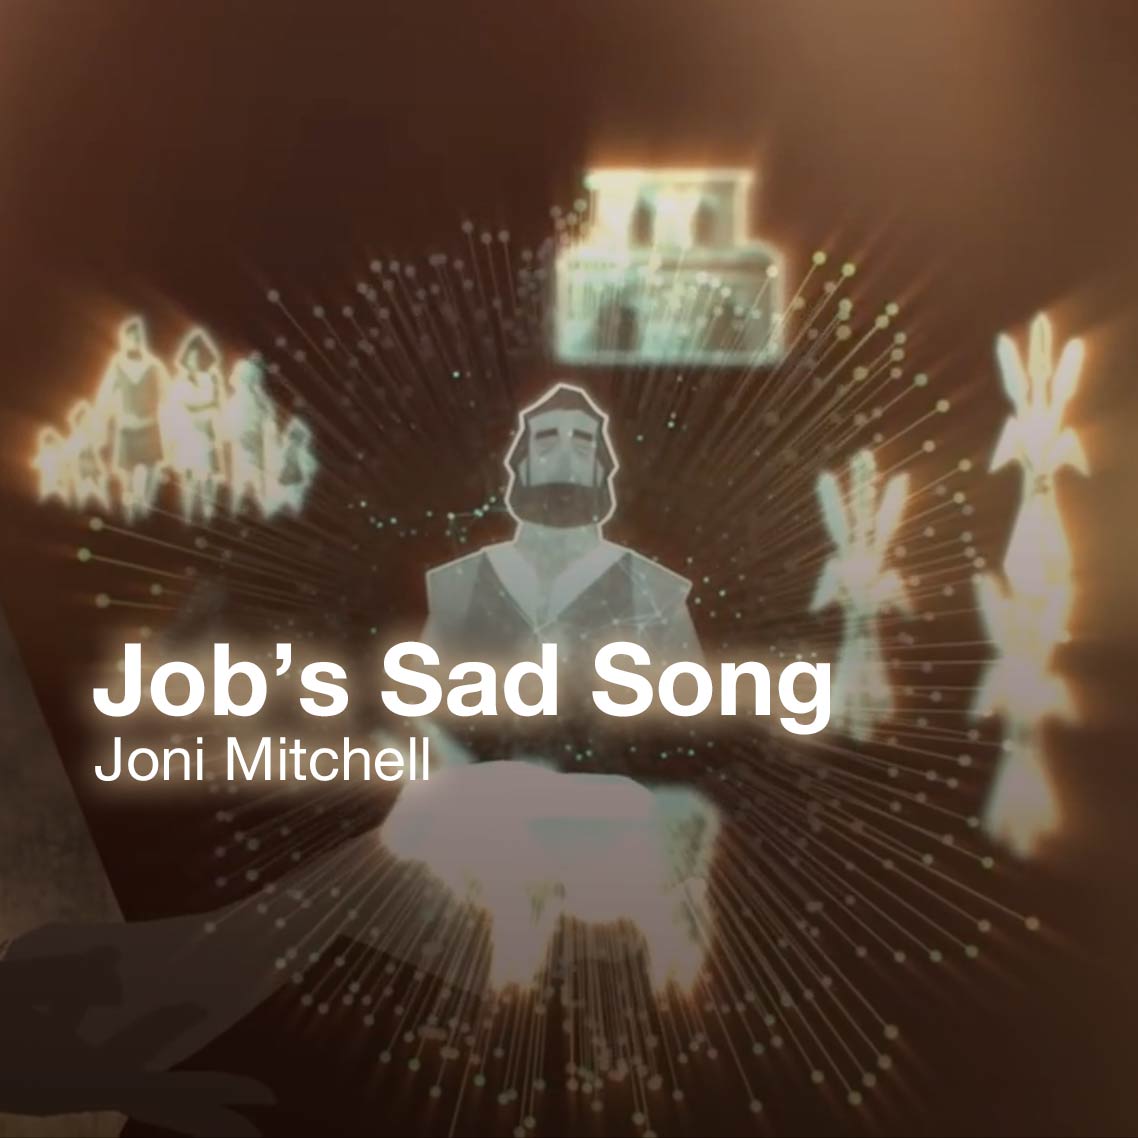 Job's Sad Song | music video 